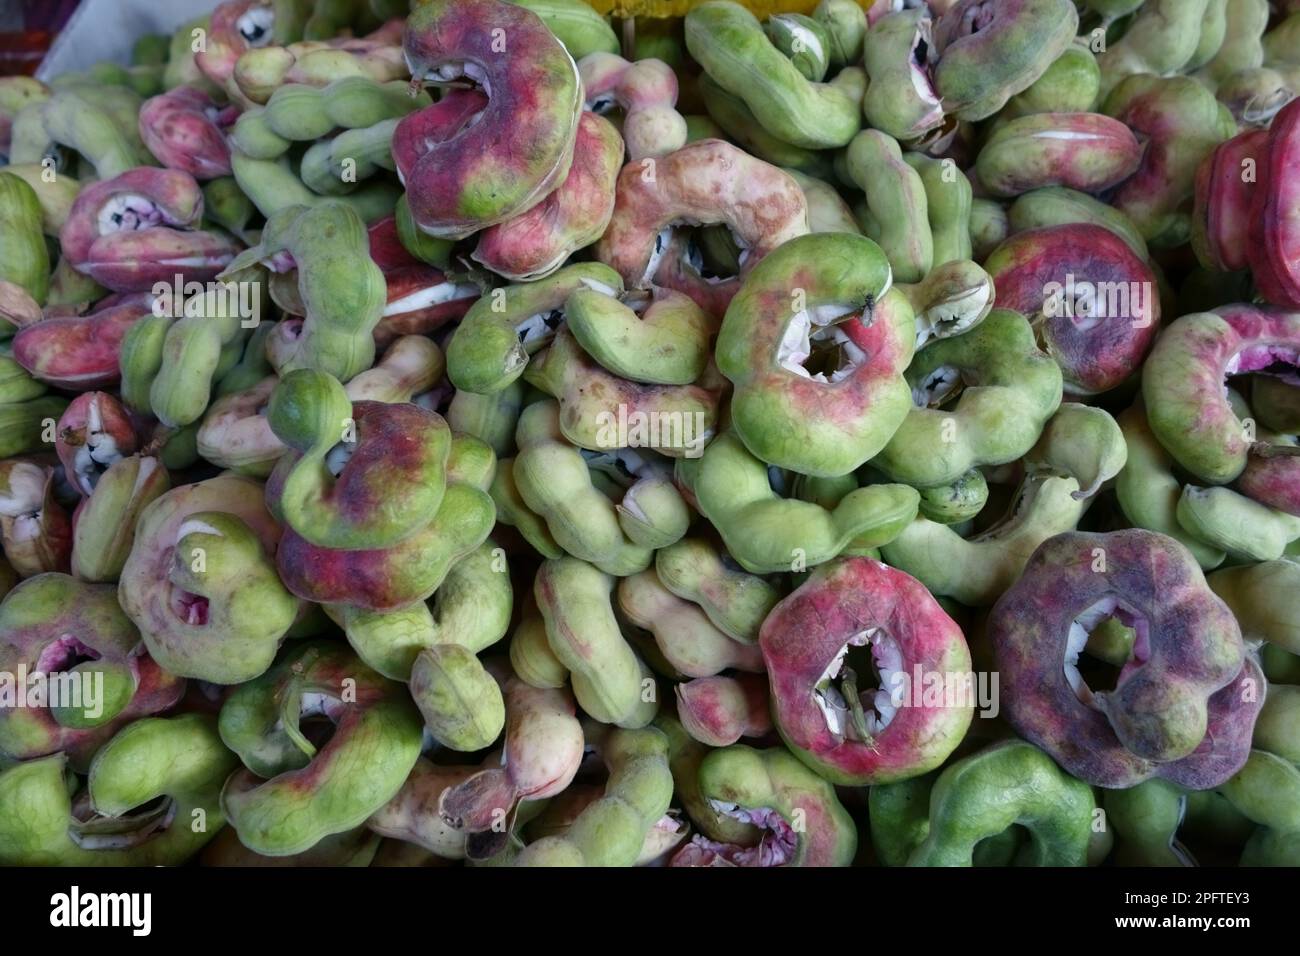 Manila tamarind, Pithecellobium dulce, seed pods for sale at the food market, Bangkok, Thailand Stock Photo